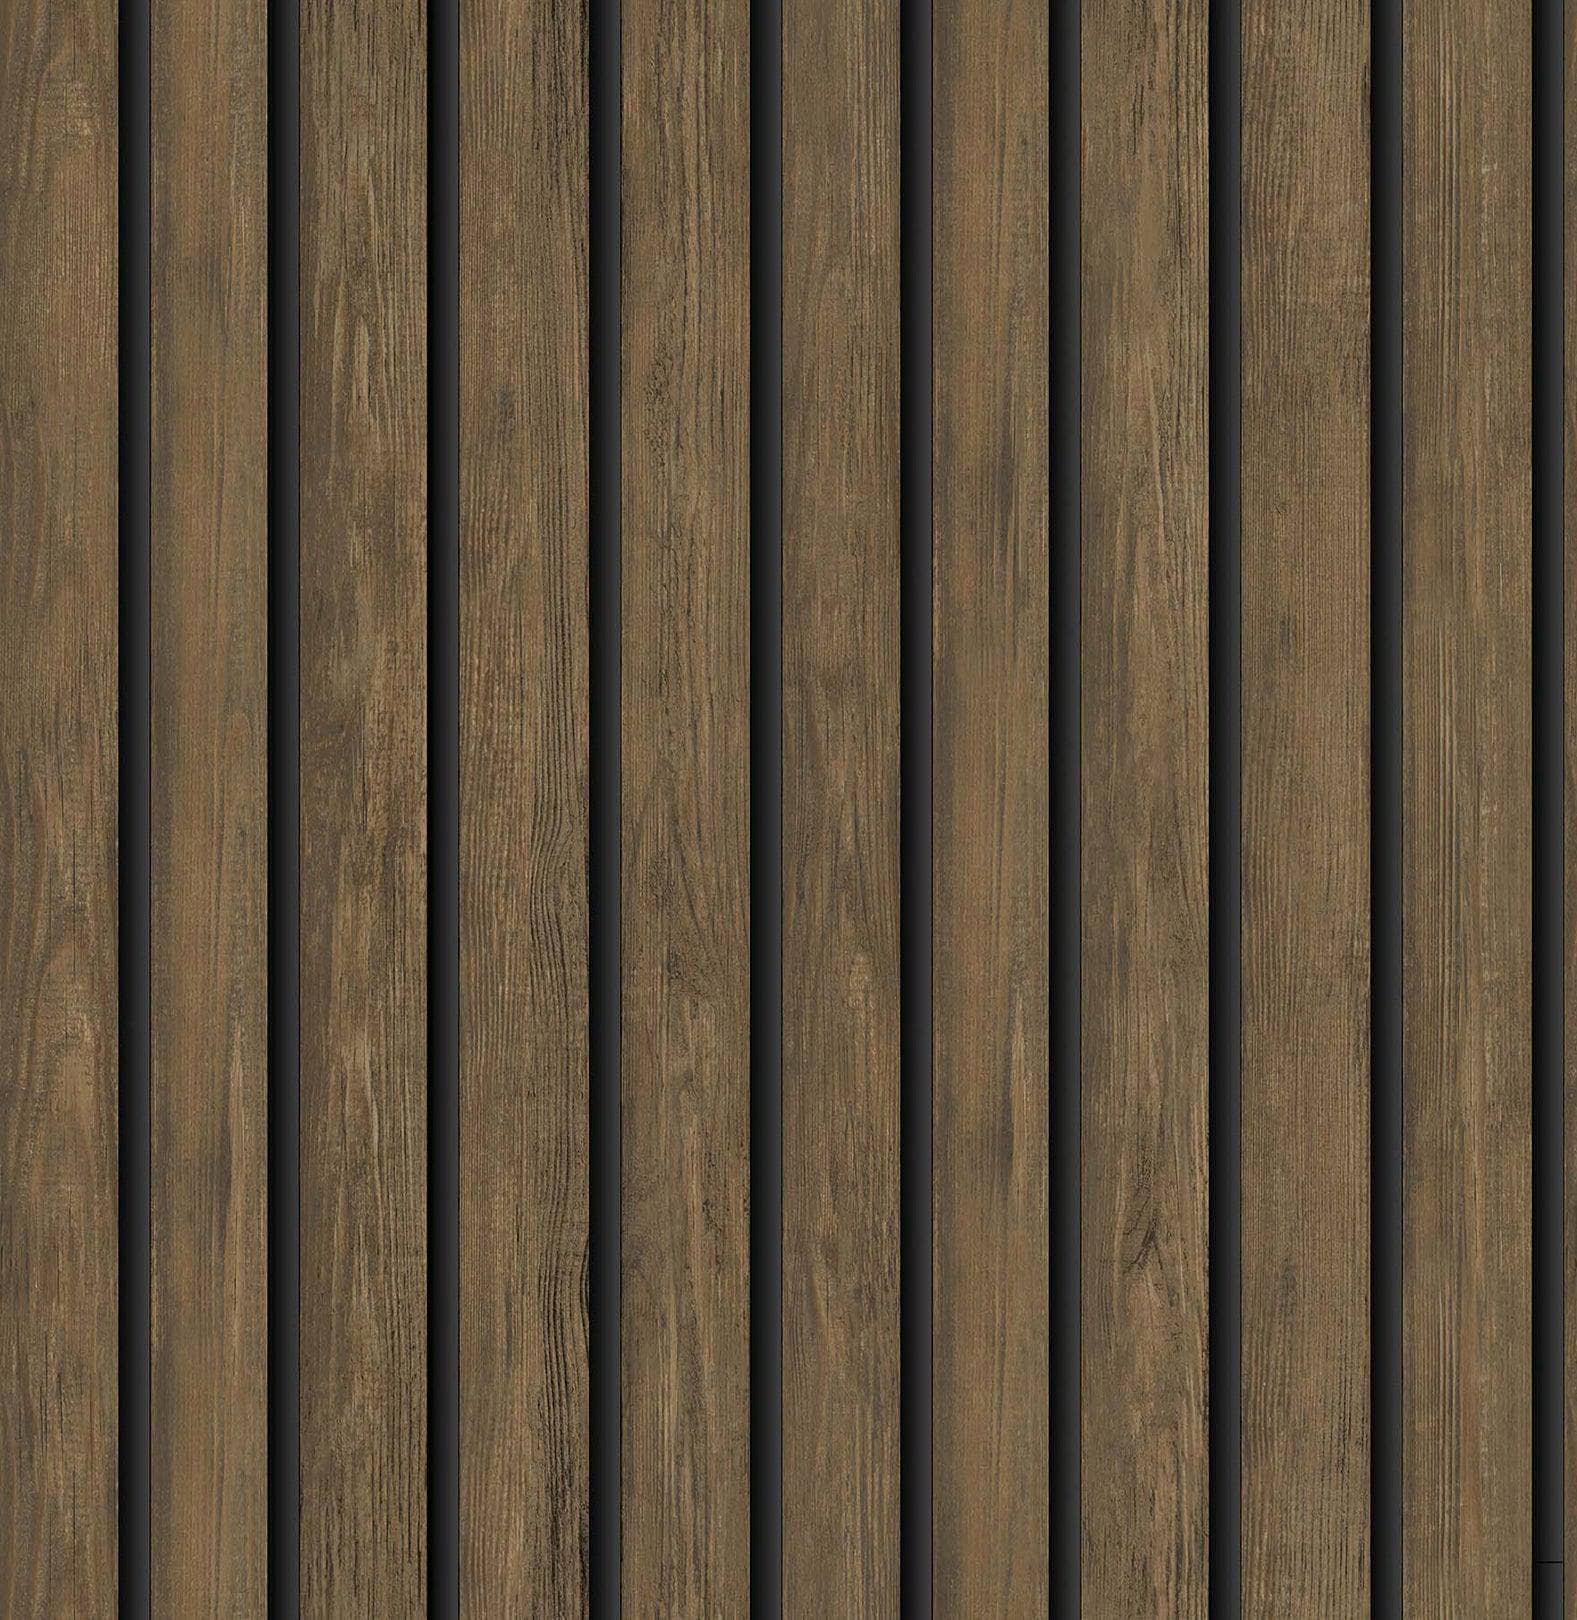 Wallpaper  -  Holden Wood Slate Dark Oak Wallpaper -13130  -  60003813